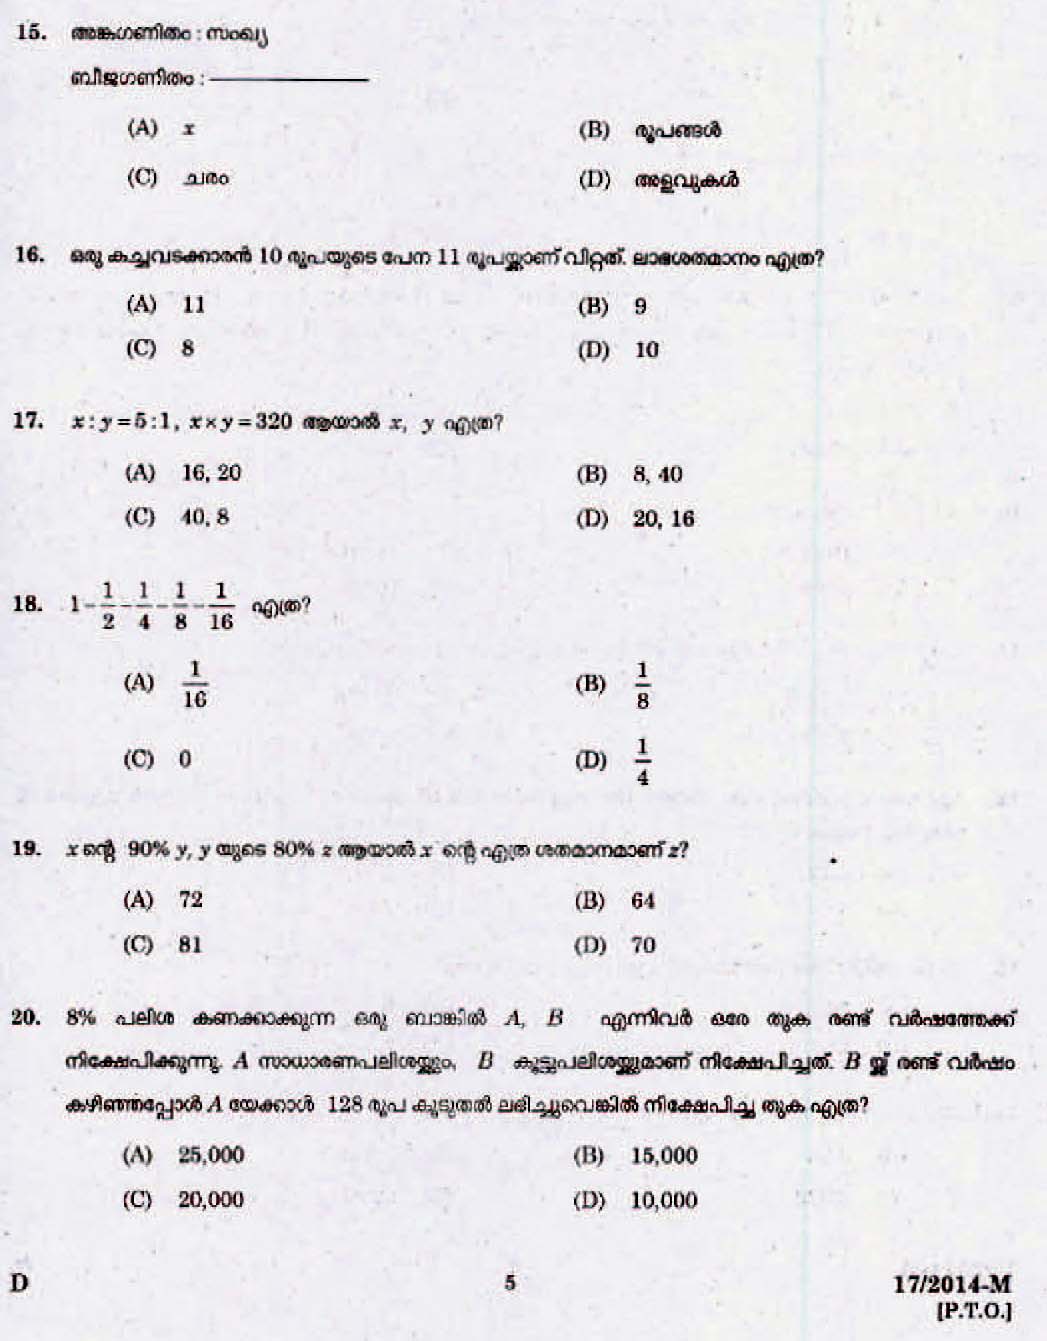 LD Clerk Palakkad Question Paper Malayalam 2014 Paper Code 172014 M 3